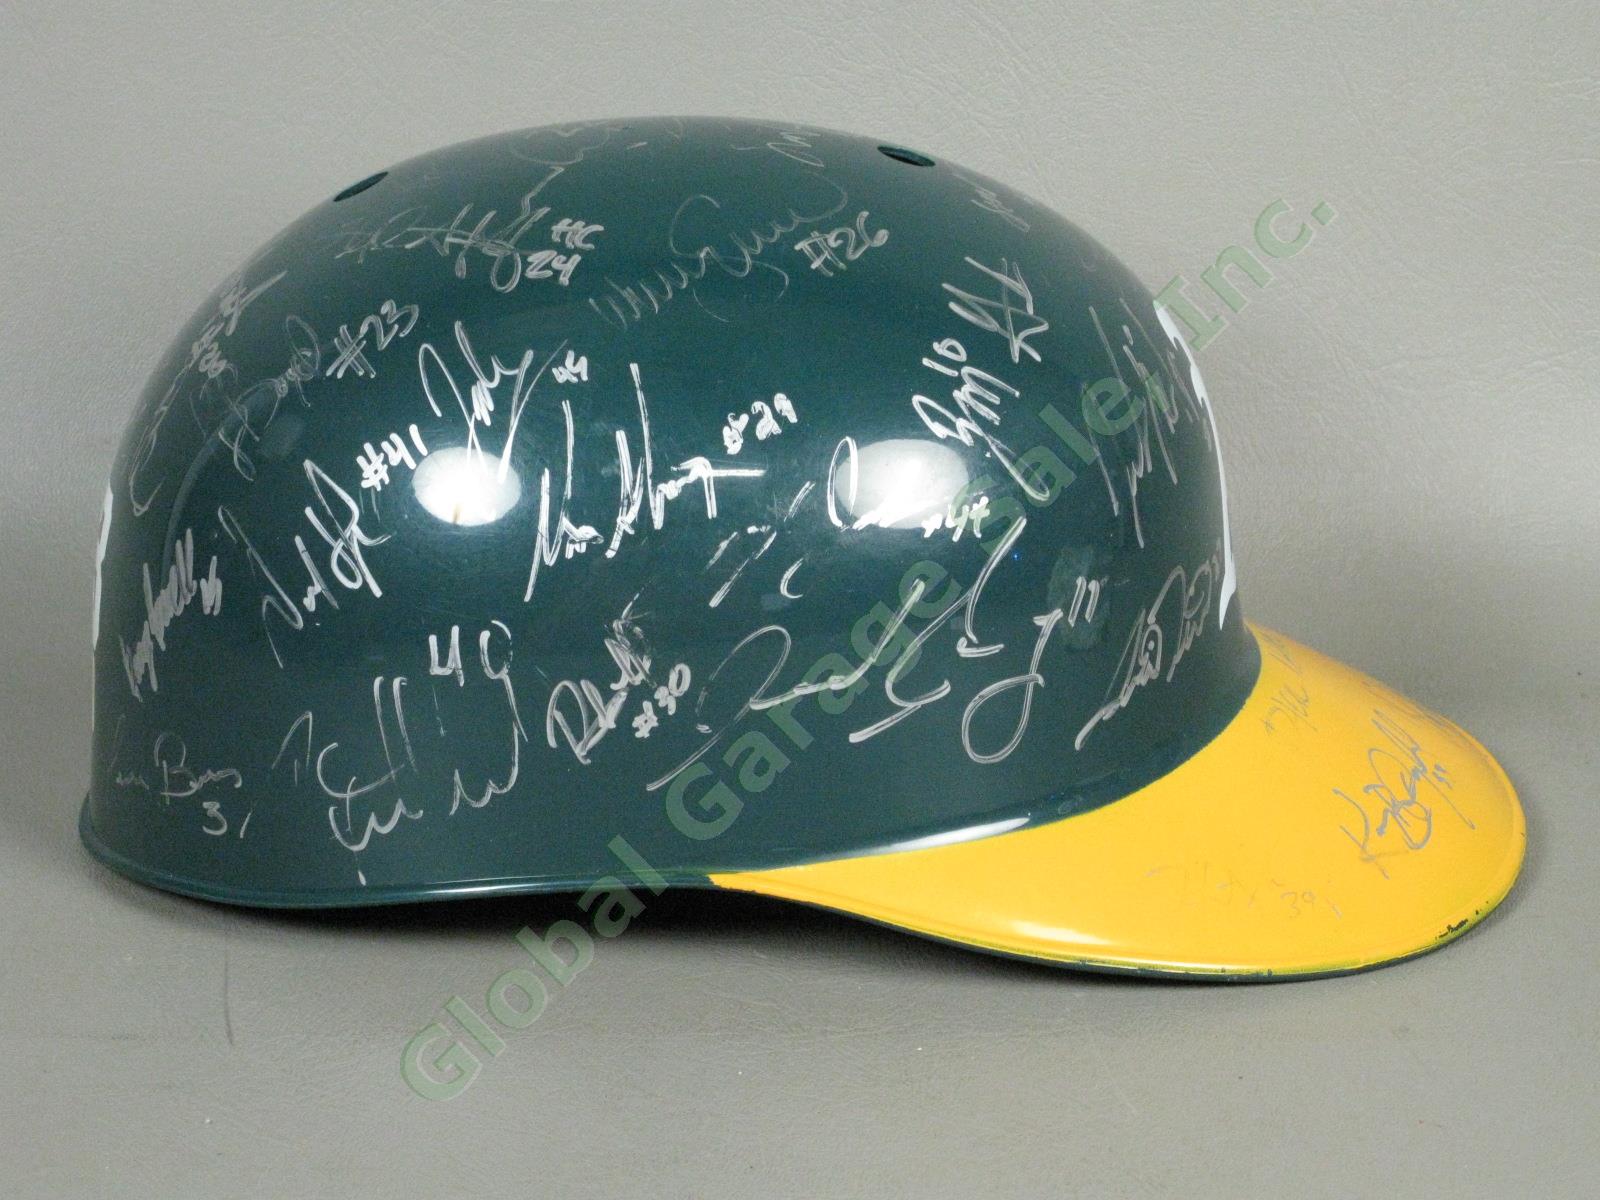 2013 Vermont Lake Monsters Team Signed Baseball Helmet NYPL Oakland Athletics NR 1